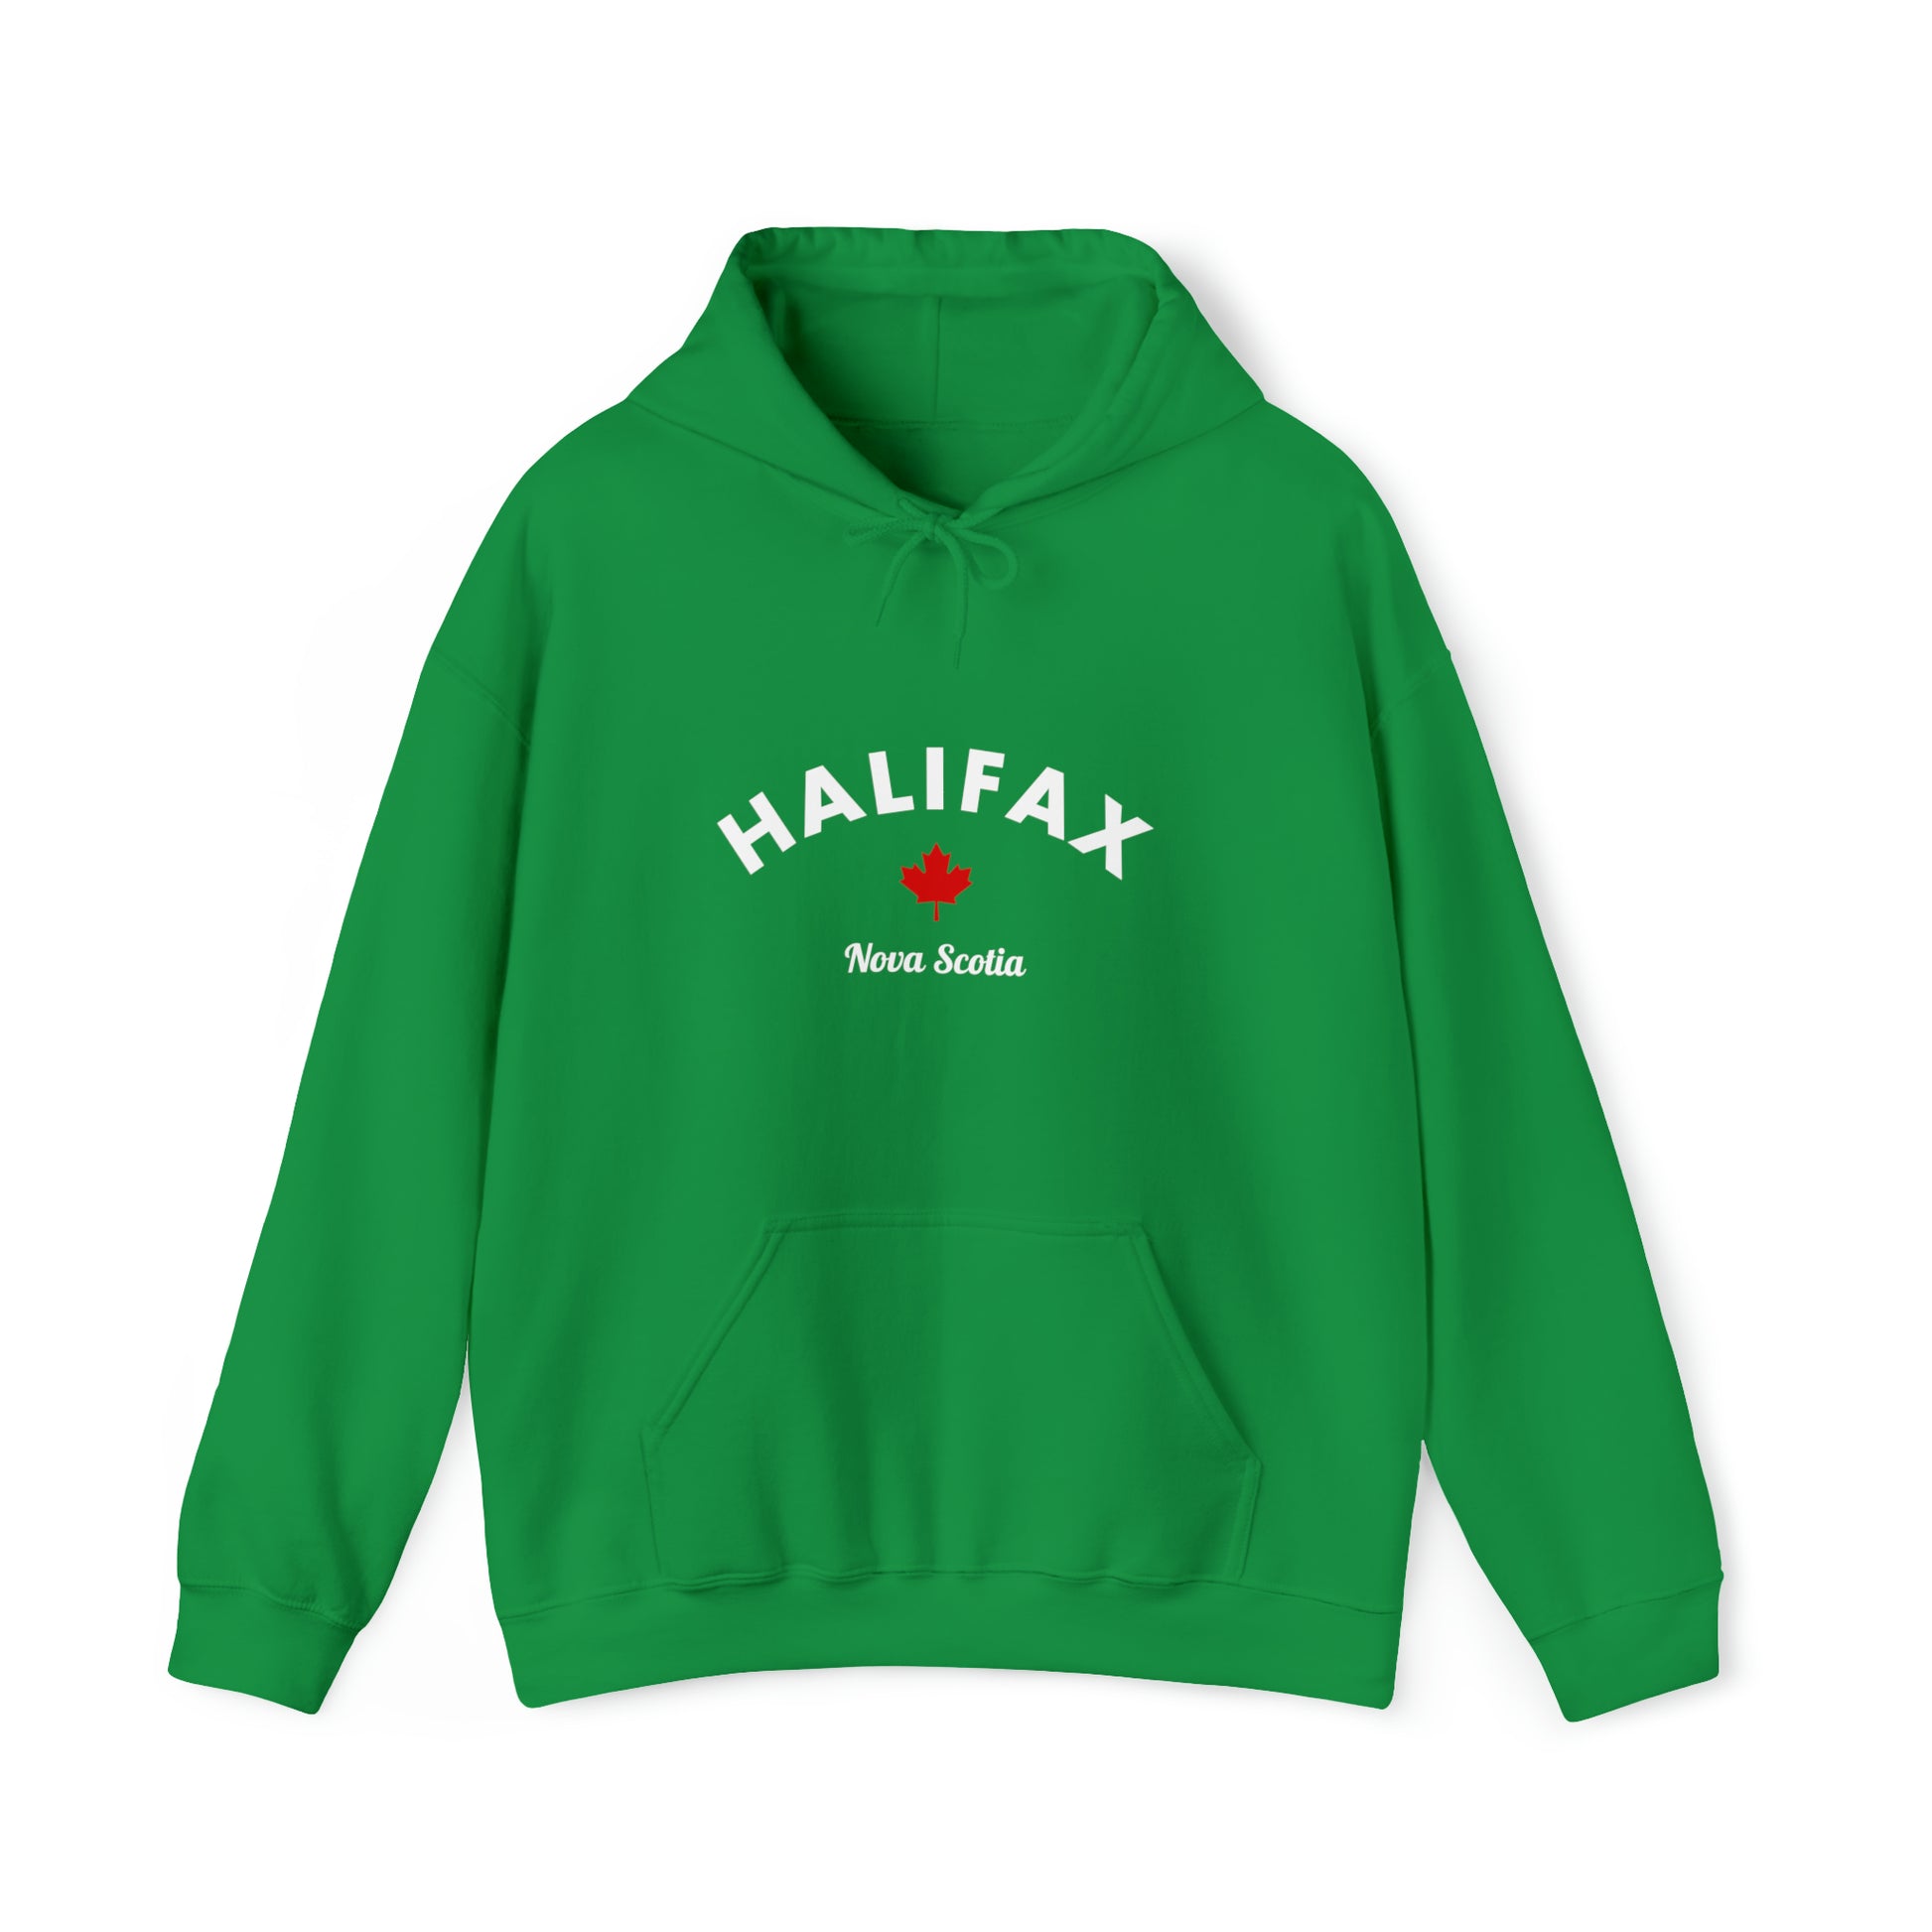 S Irish Green Halifax Hoodie from HoodySZN.com